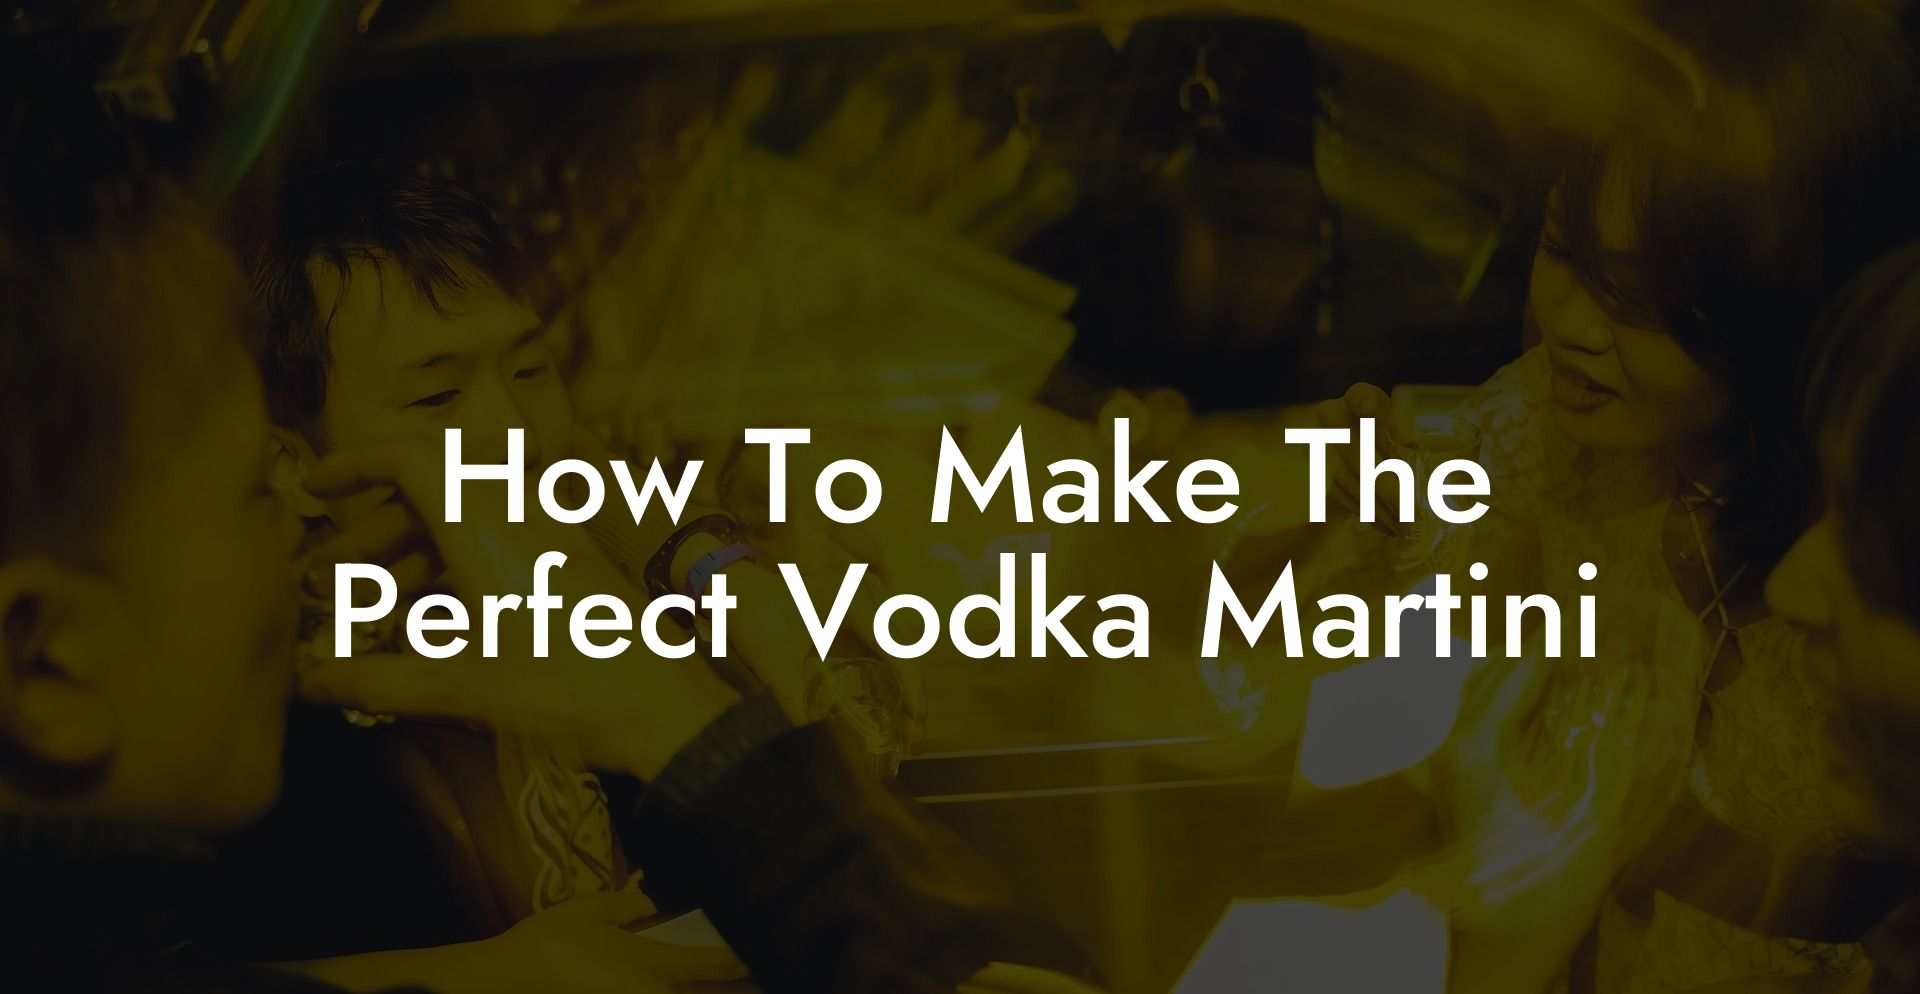 How To Make The Perfect Vodka Martini